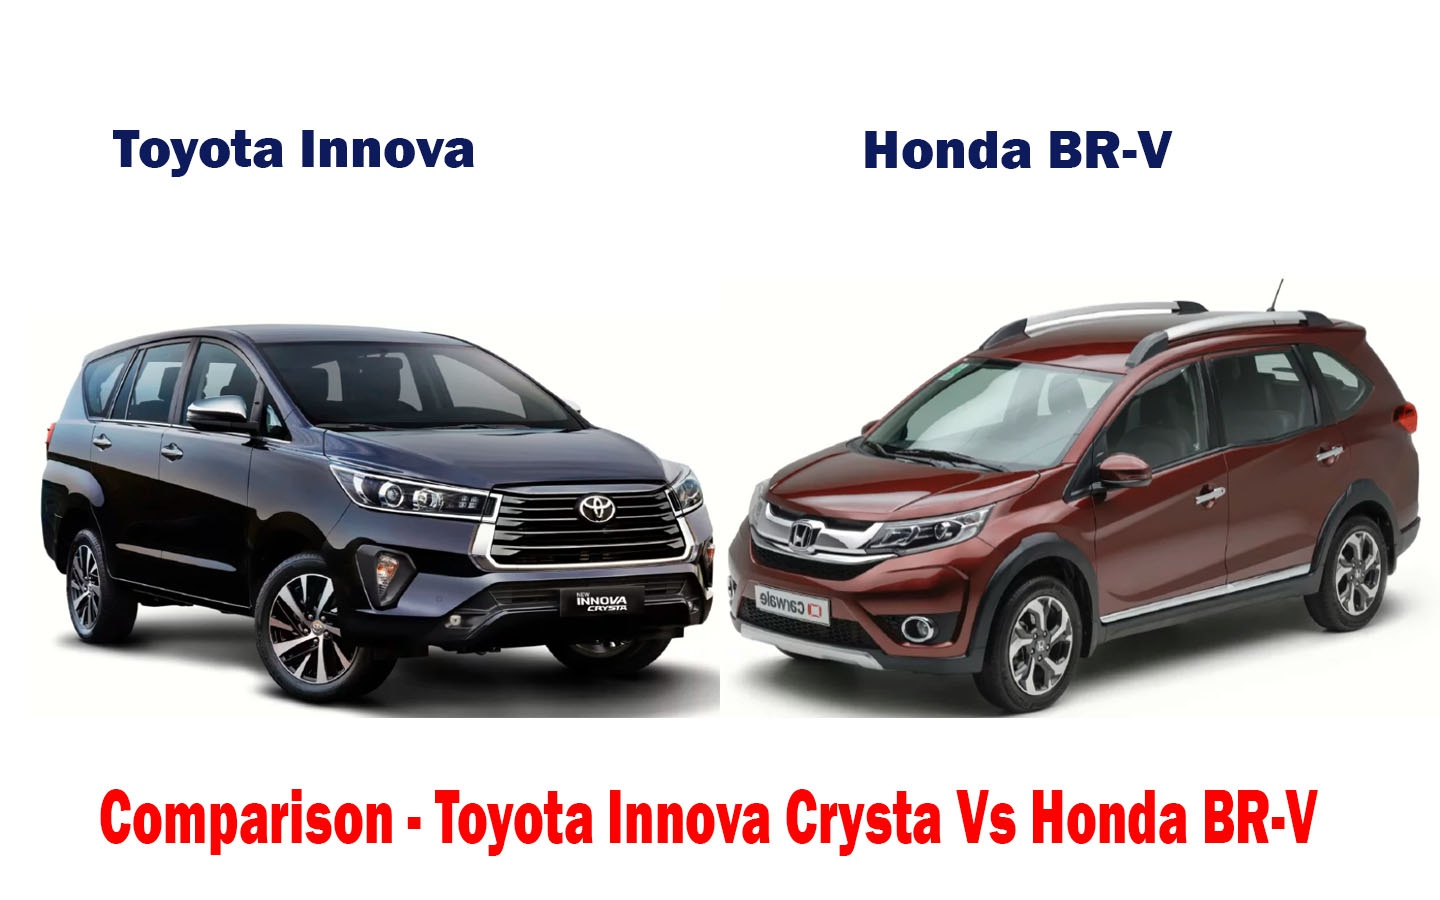 Comparison Toyota Innova Crysta Vs Honda BR-V